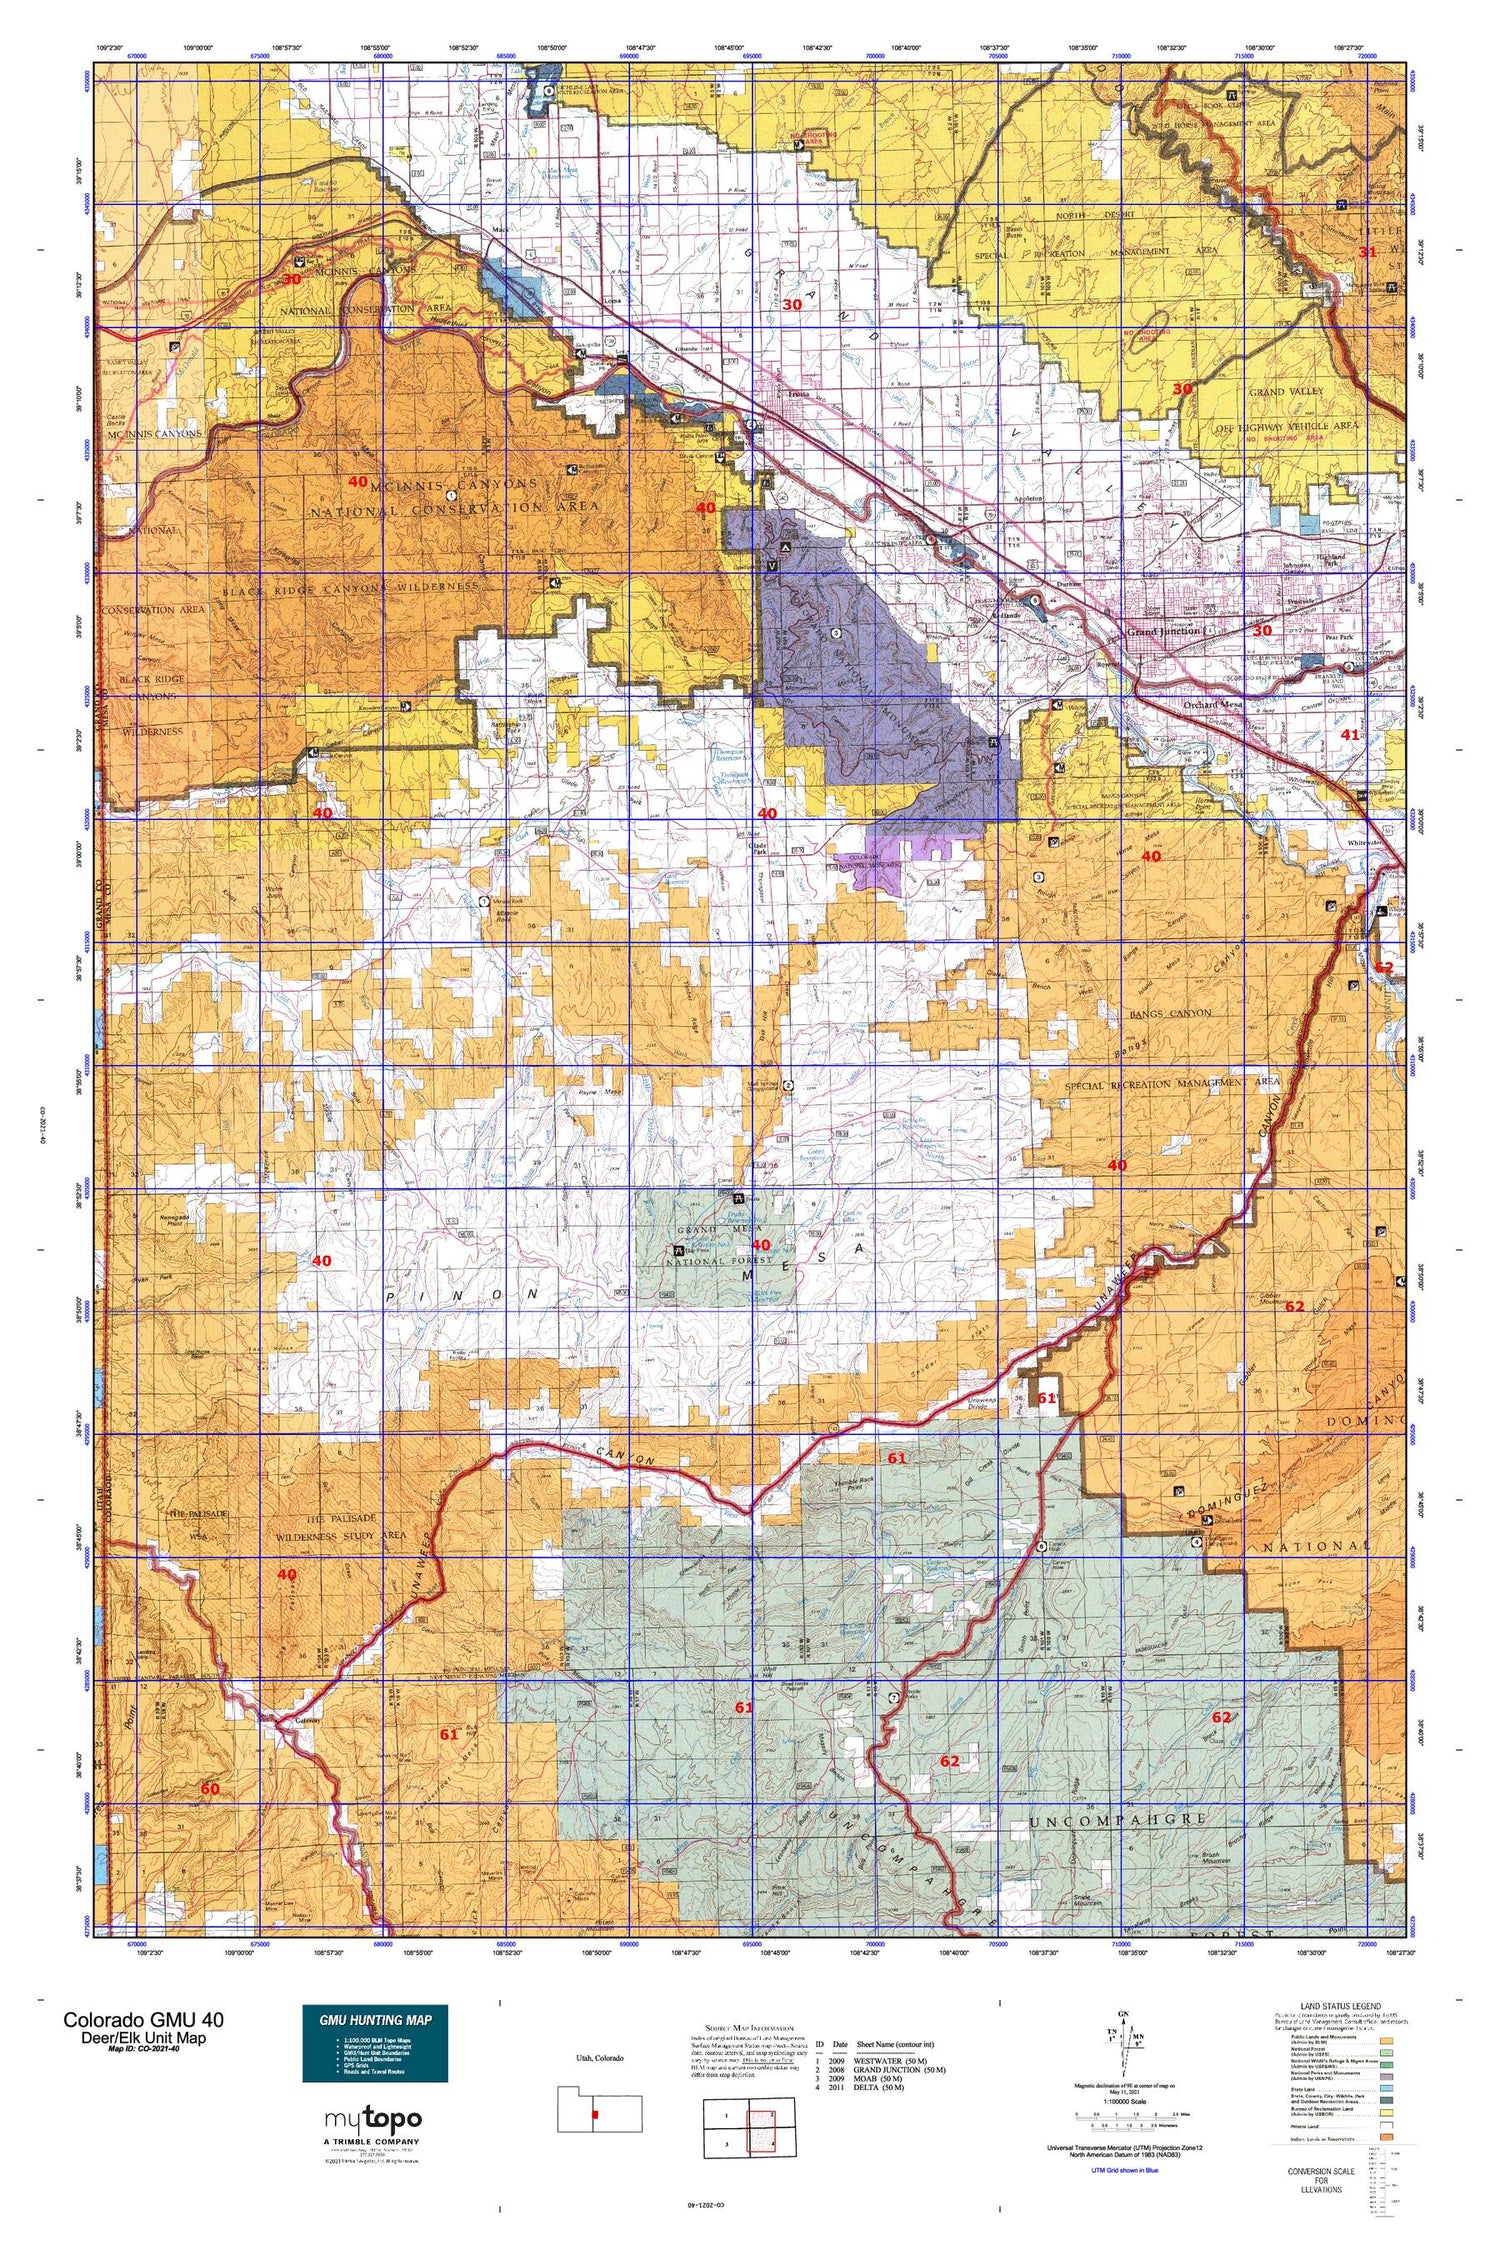 Colorado GMU 40 Map Image